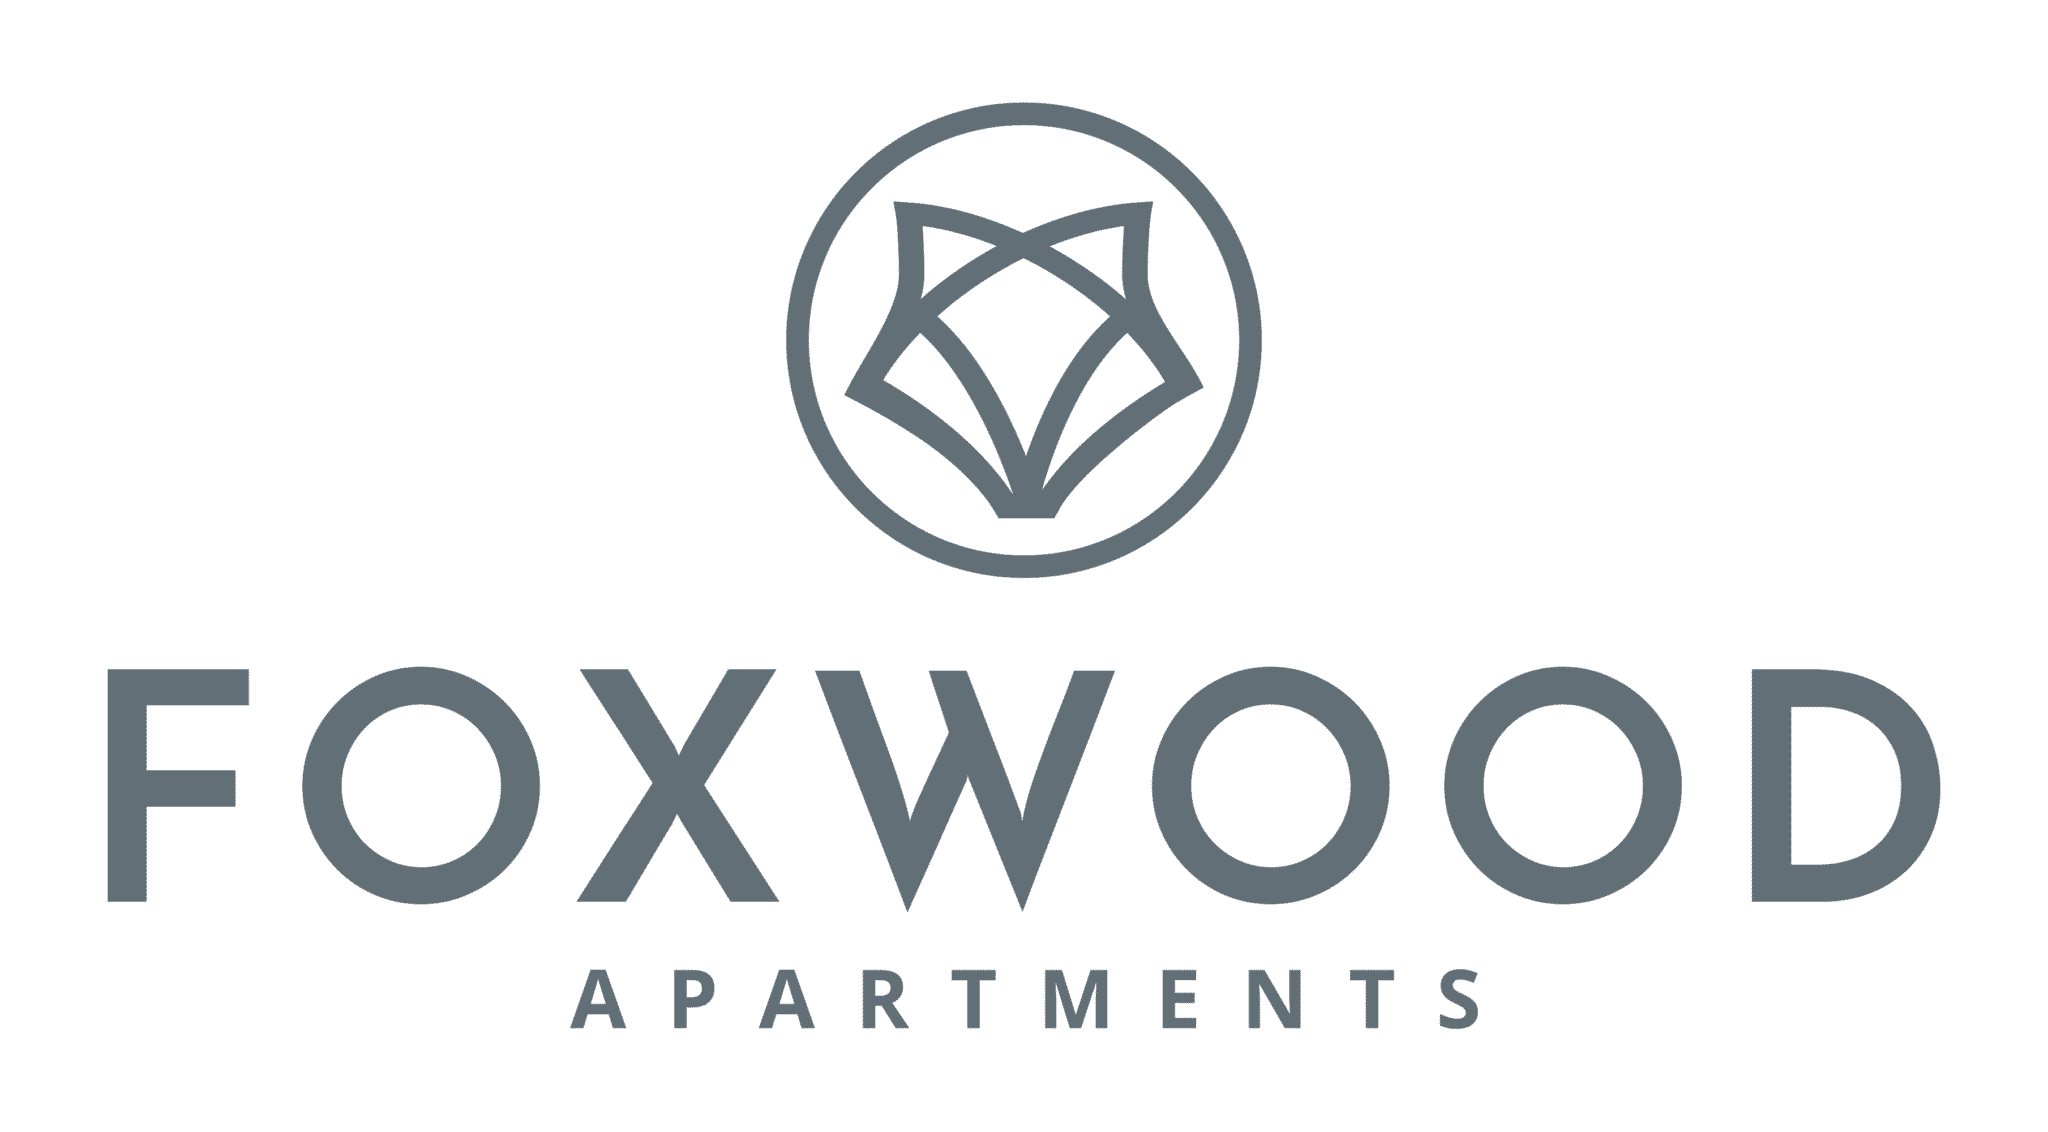 Foxwood Apartments Website Logo